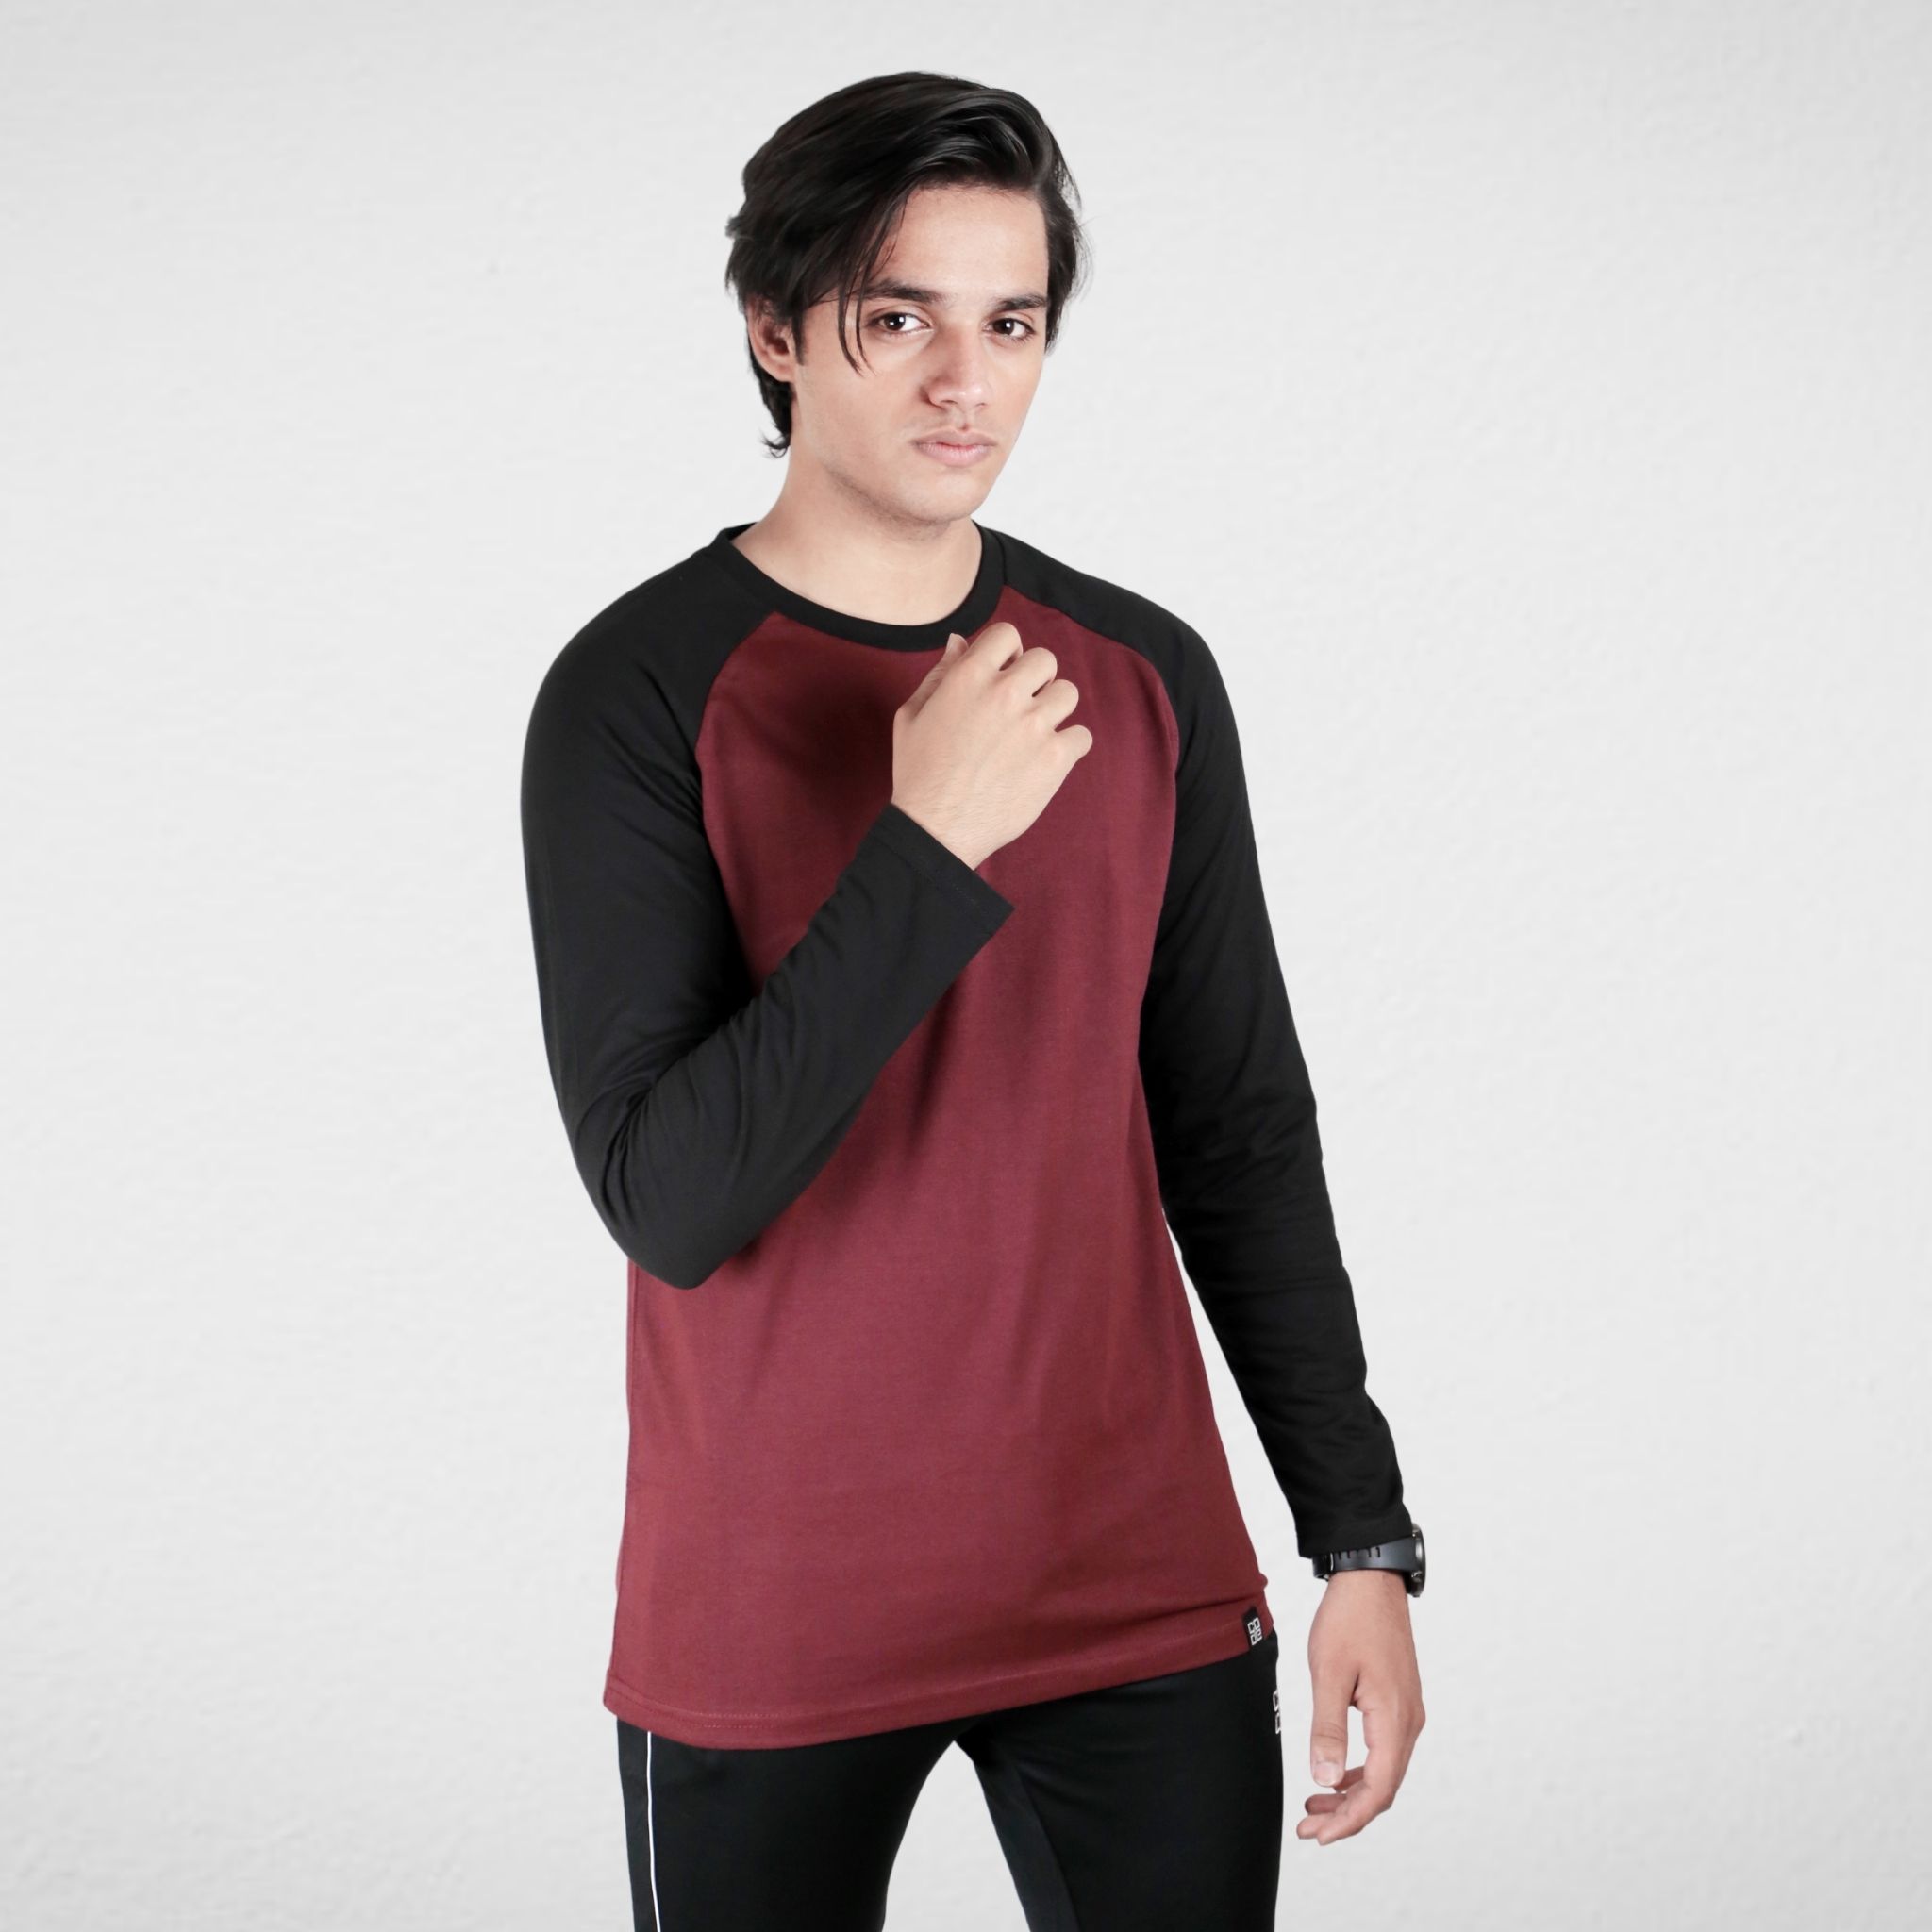 Raglan Full Sleeves T-Shirt - Wine Red